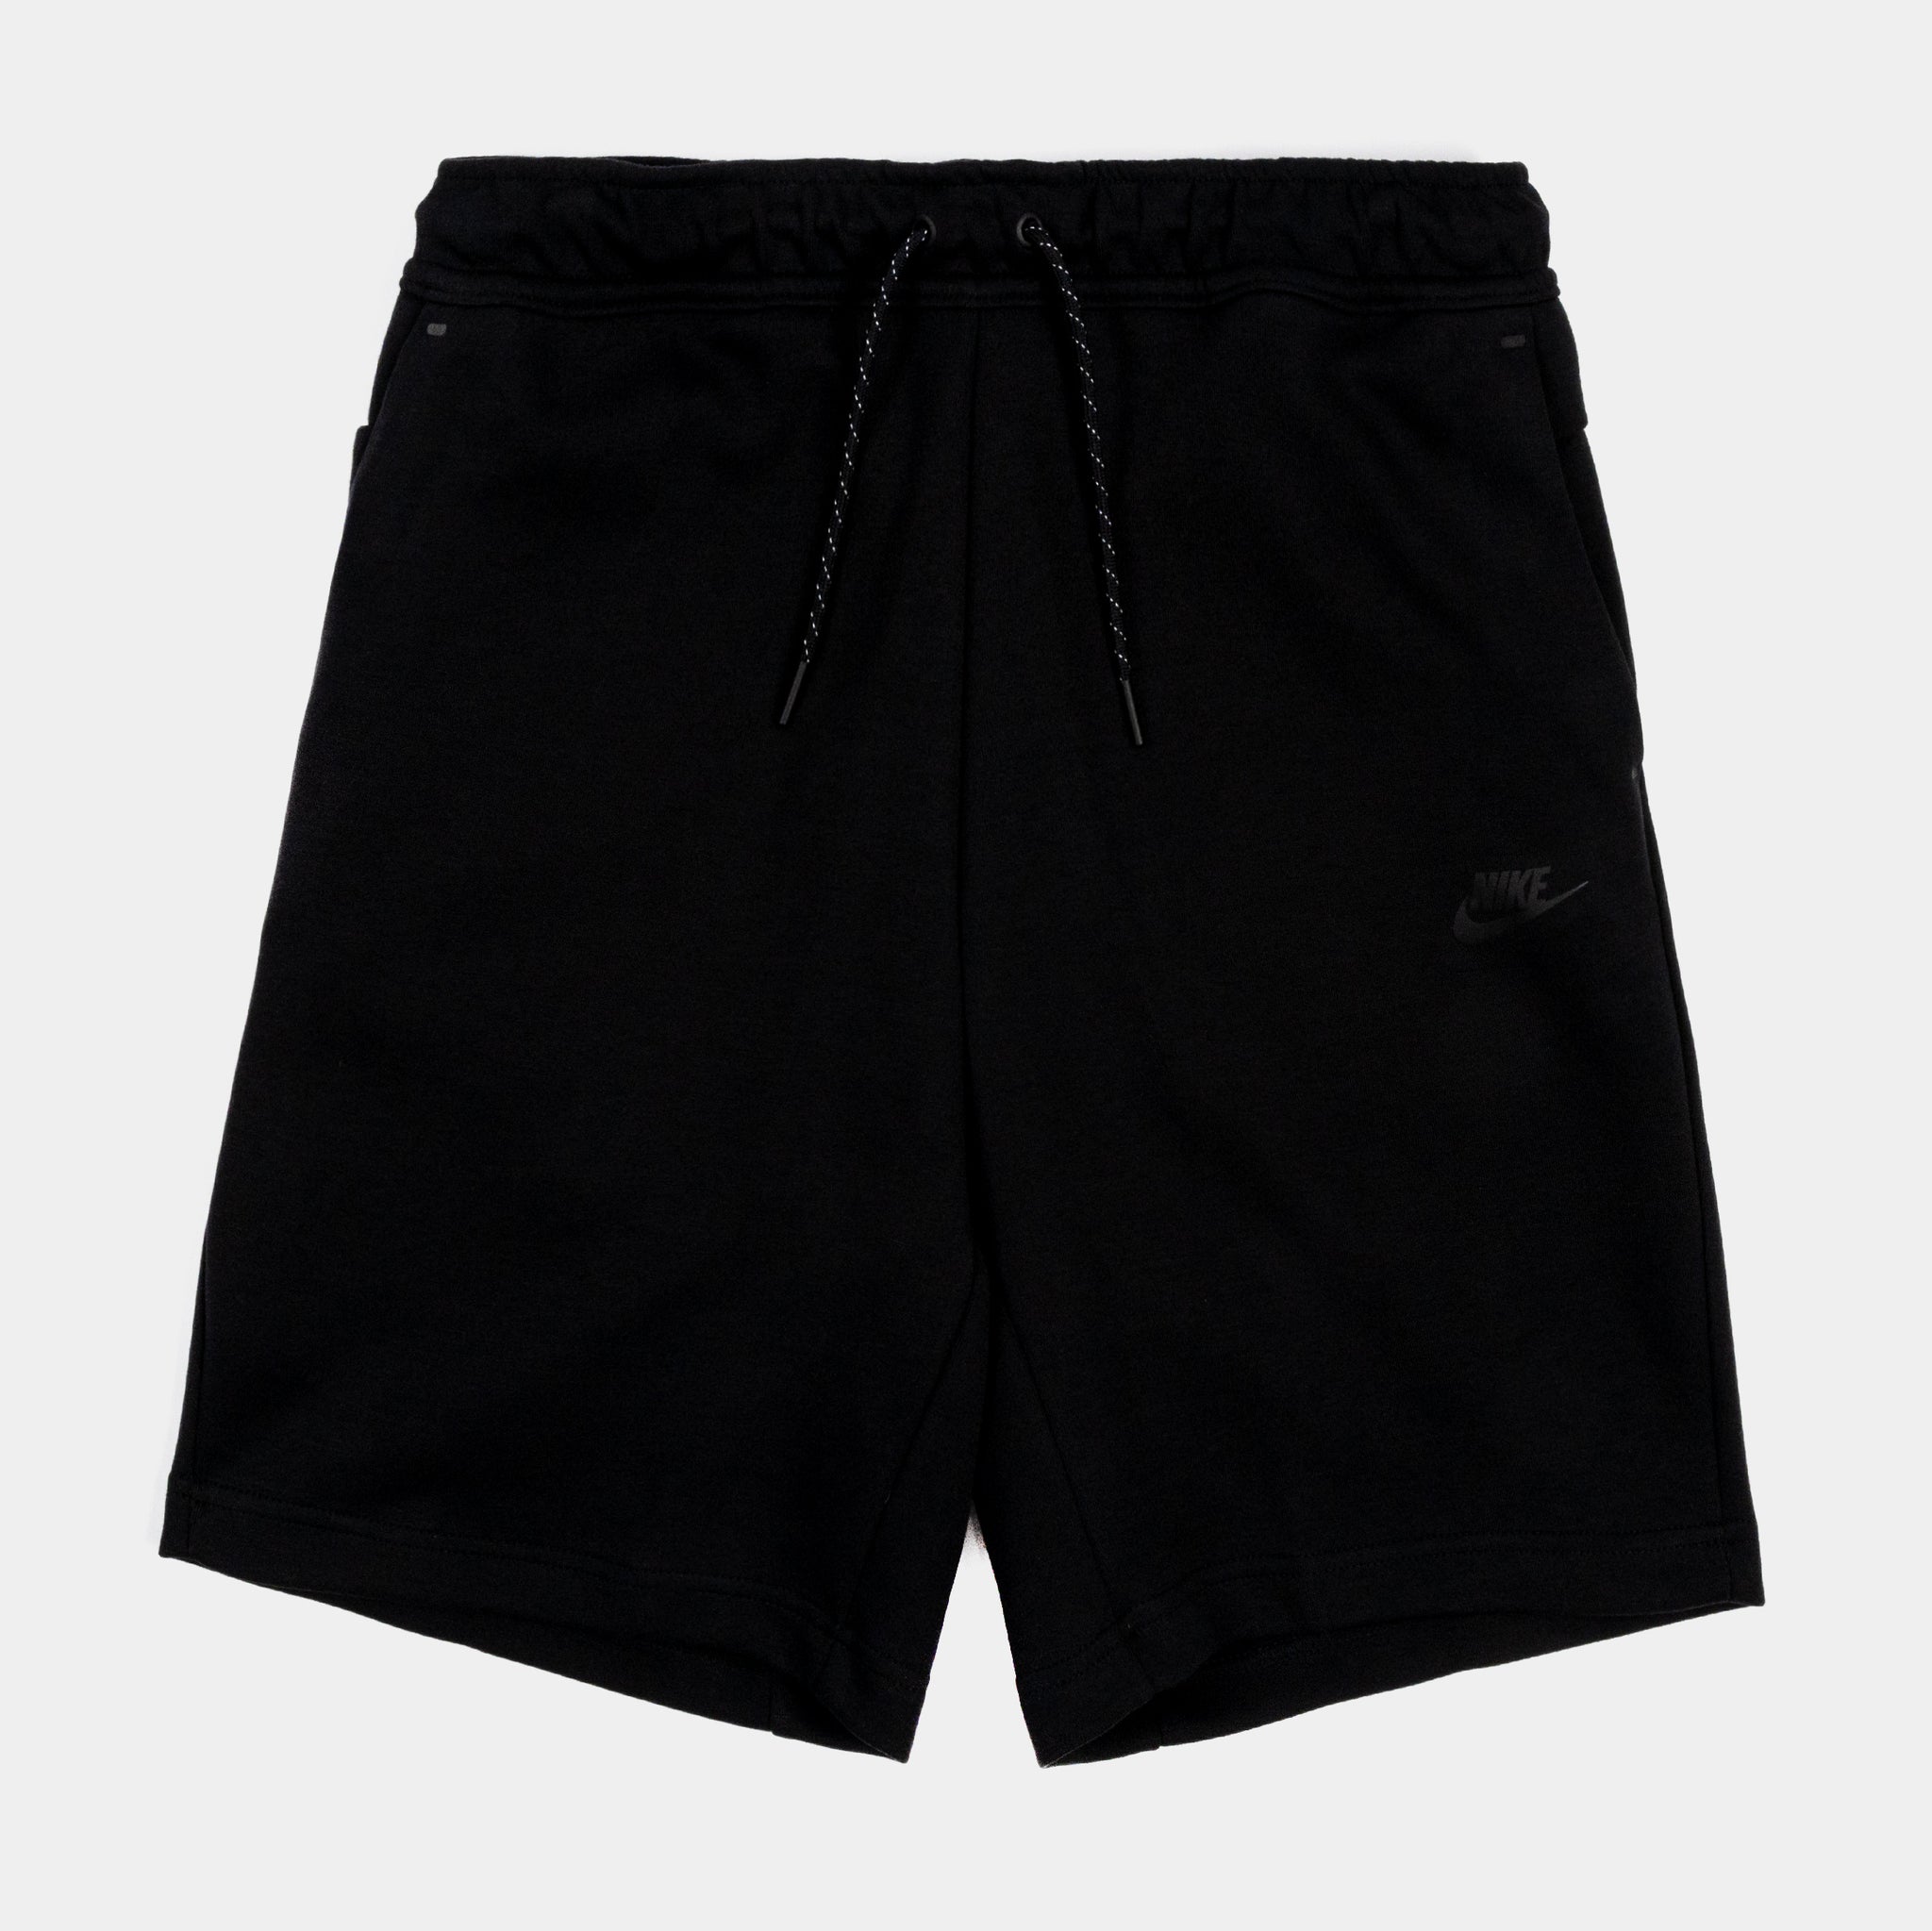 Tech Fleece Short Mens Shorts (Black)